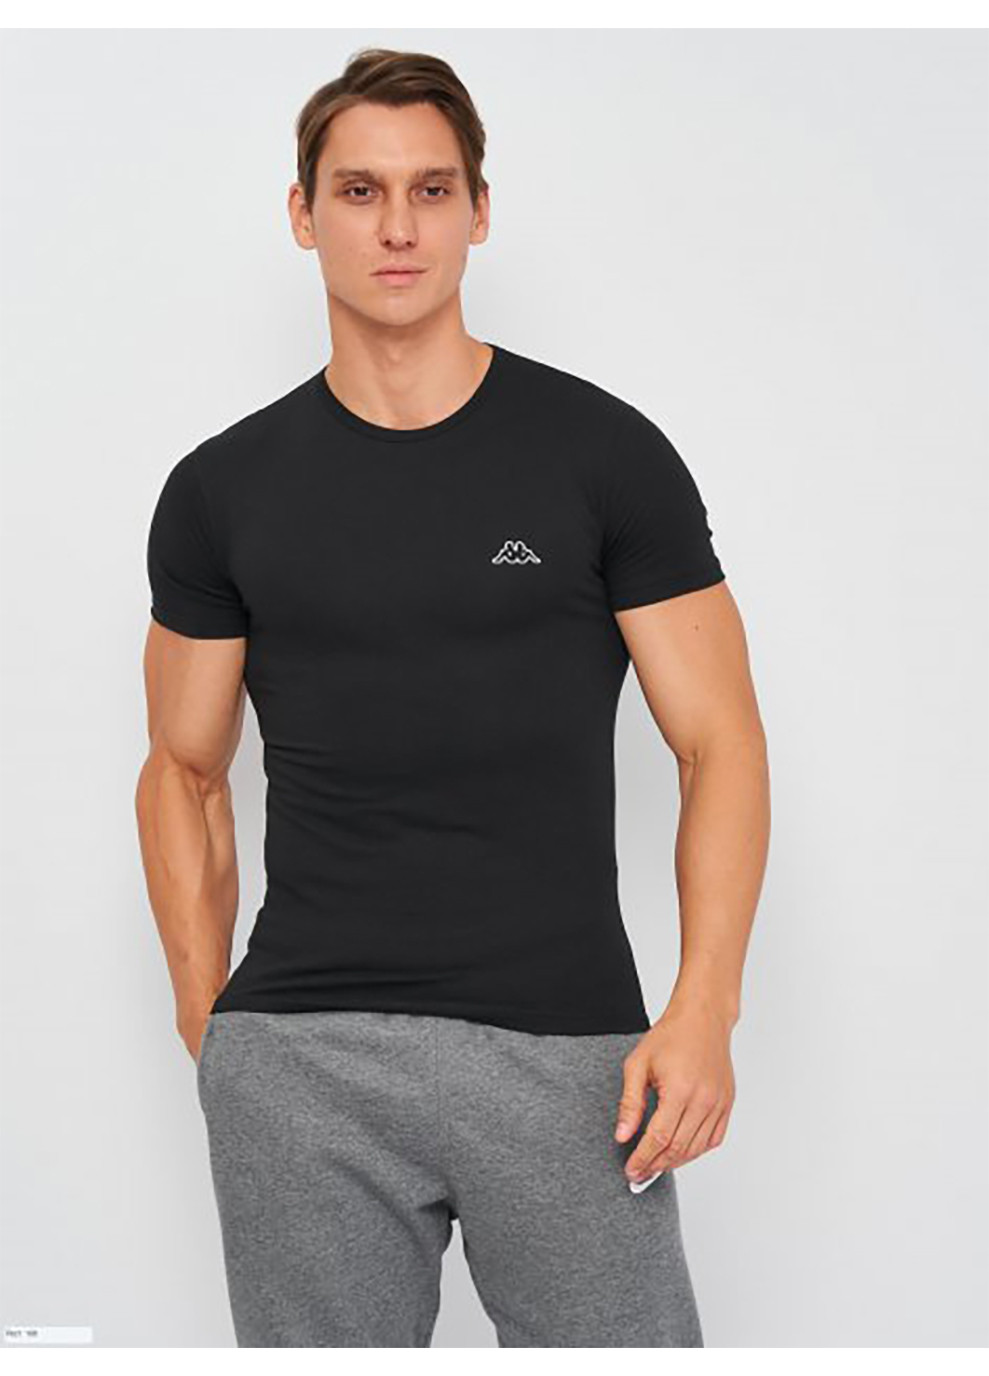 Чорна футболка t-shirt mezza manica girocollo чорний 2xl чол k1304 nero-2xl Kappa